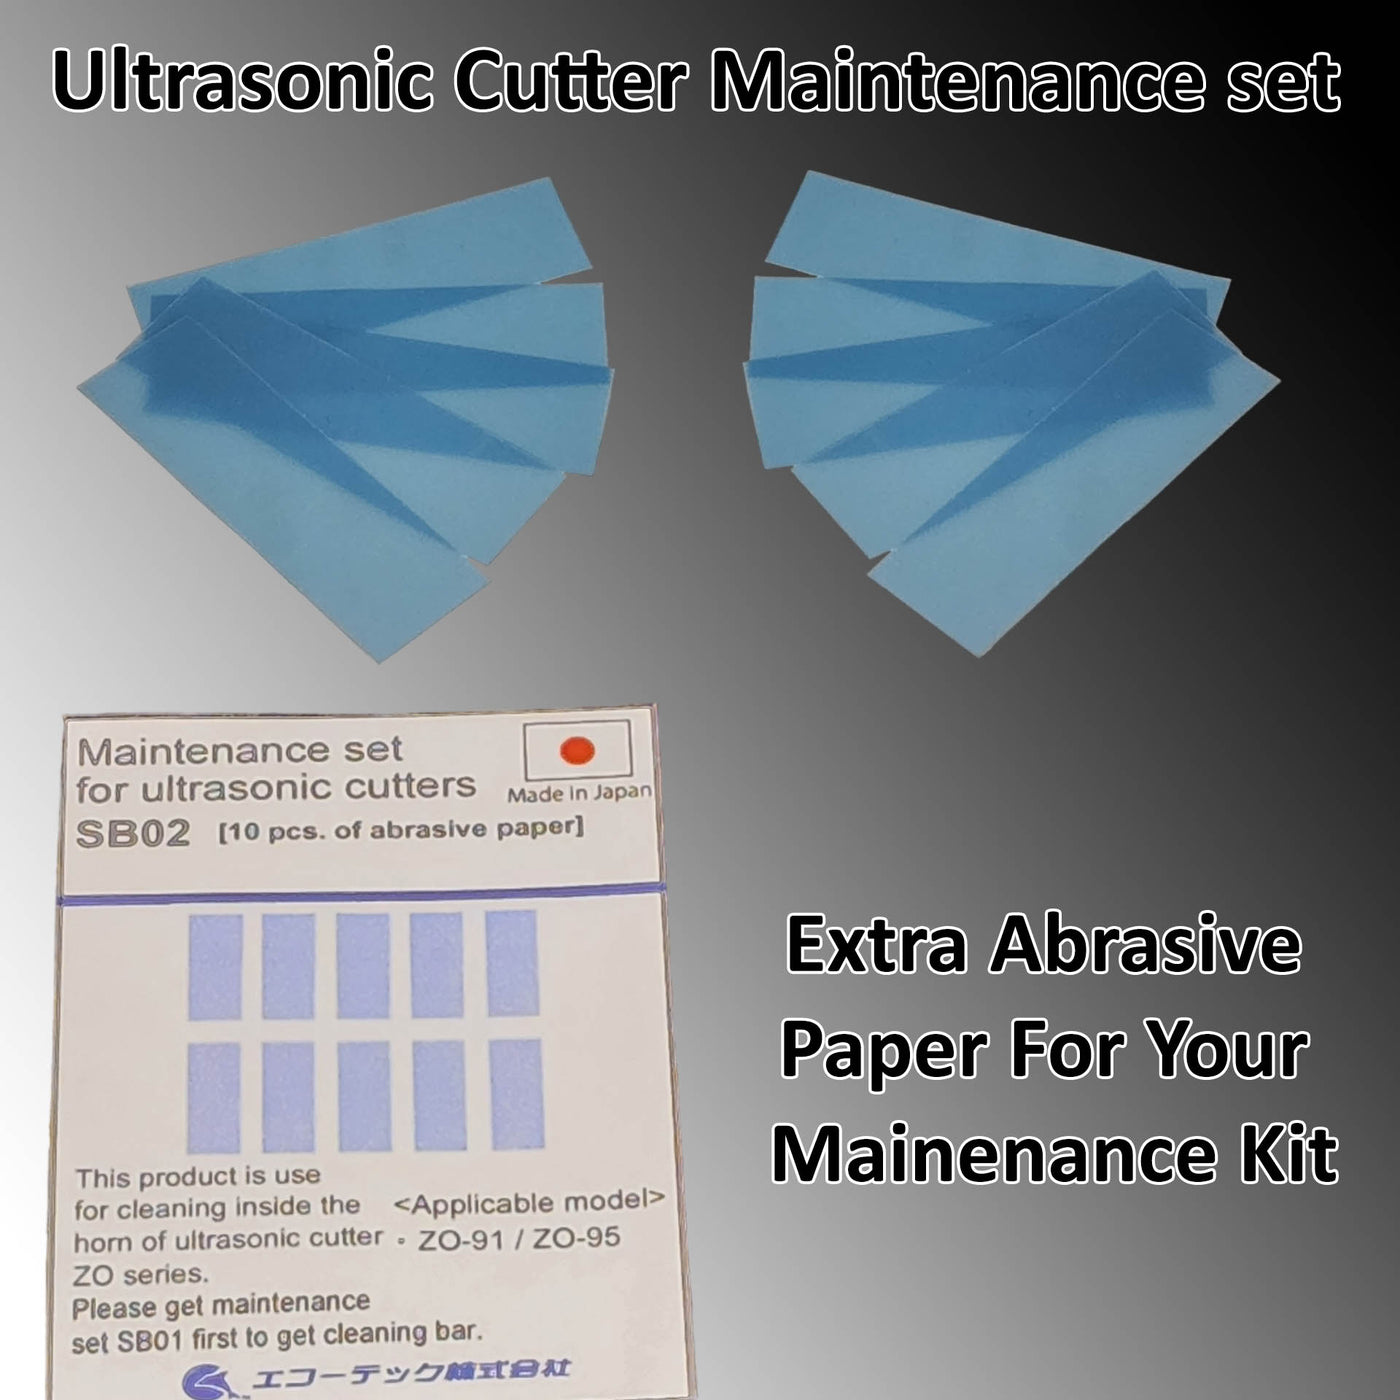 Ultrasonic Cutter Maintenance Kit Refill for all ZO series cutters SB02